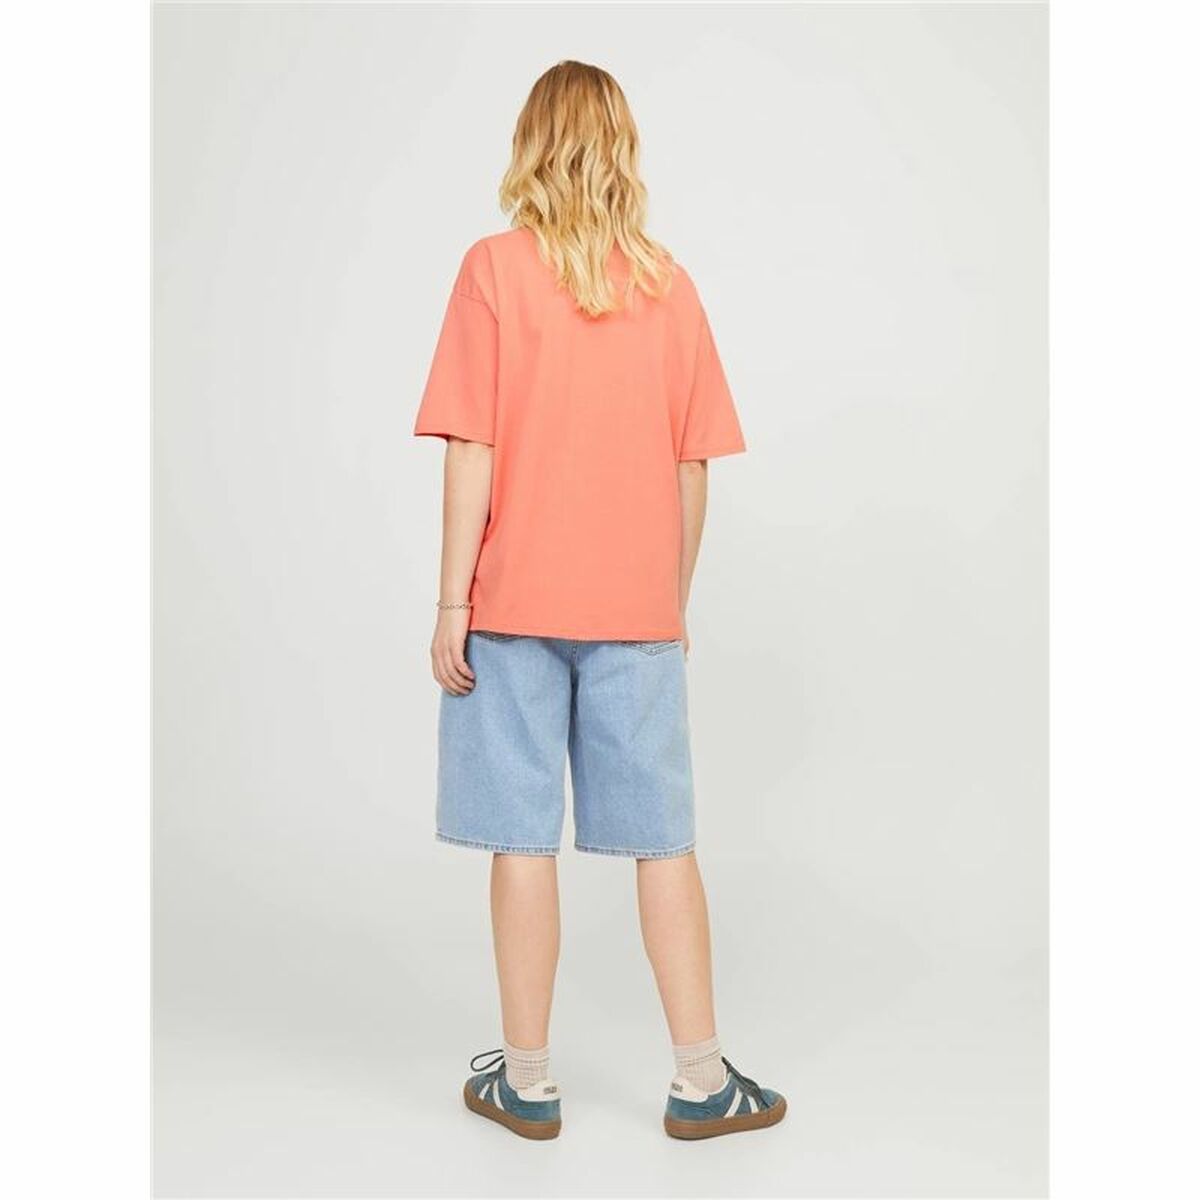 Women’s Short Sleeve T-Shirt Jack & Jones Jxpaige Orange